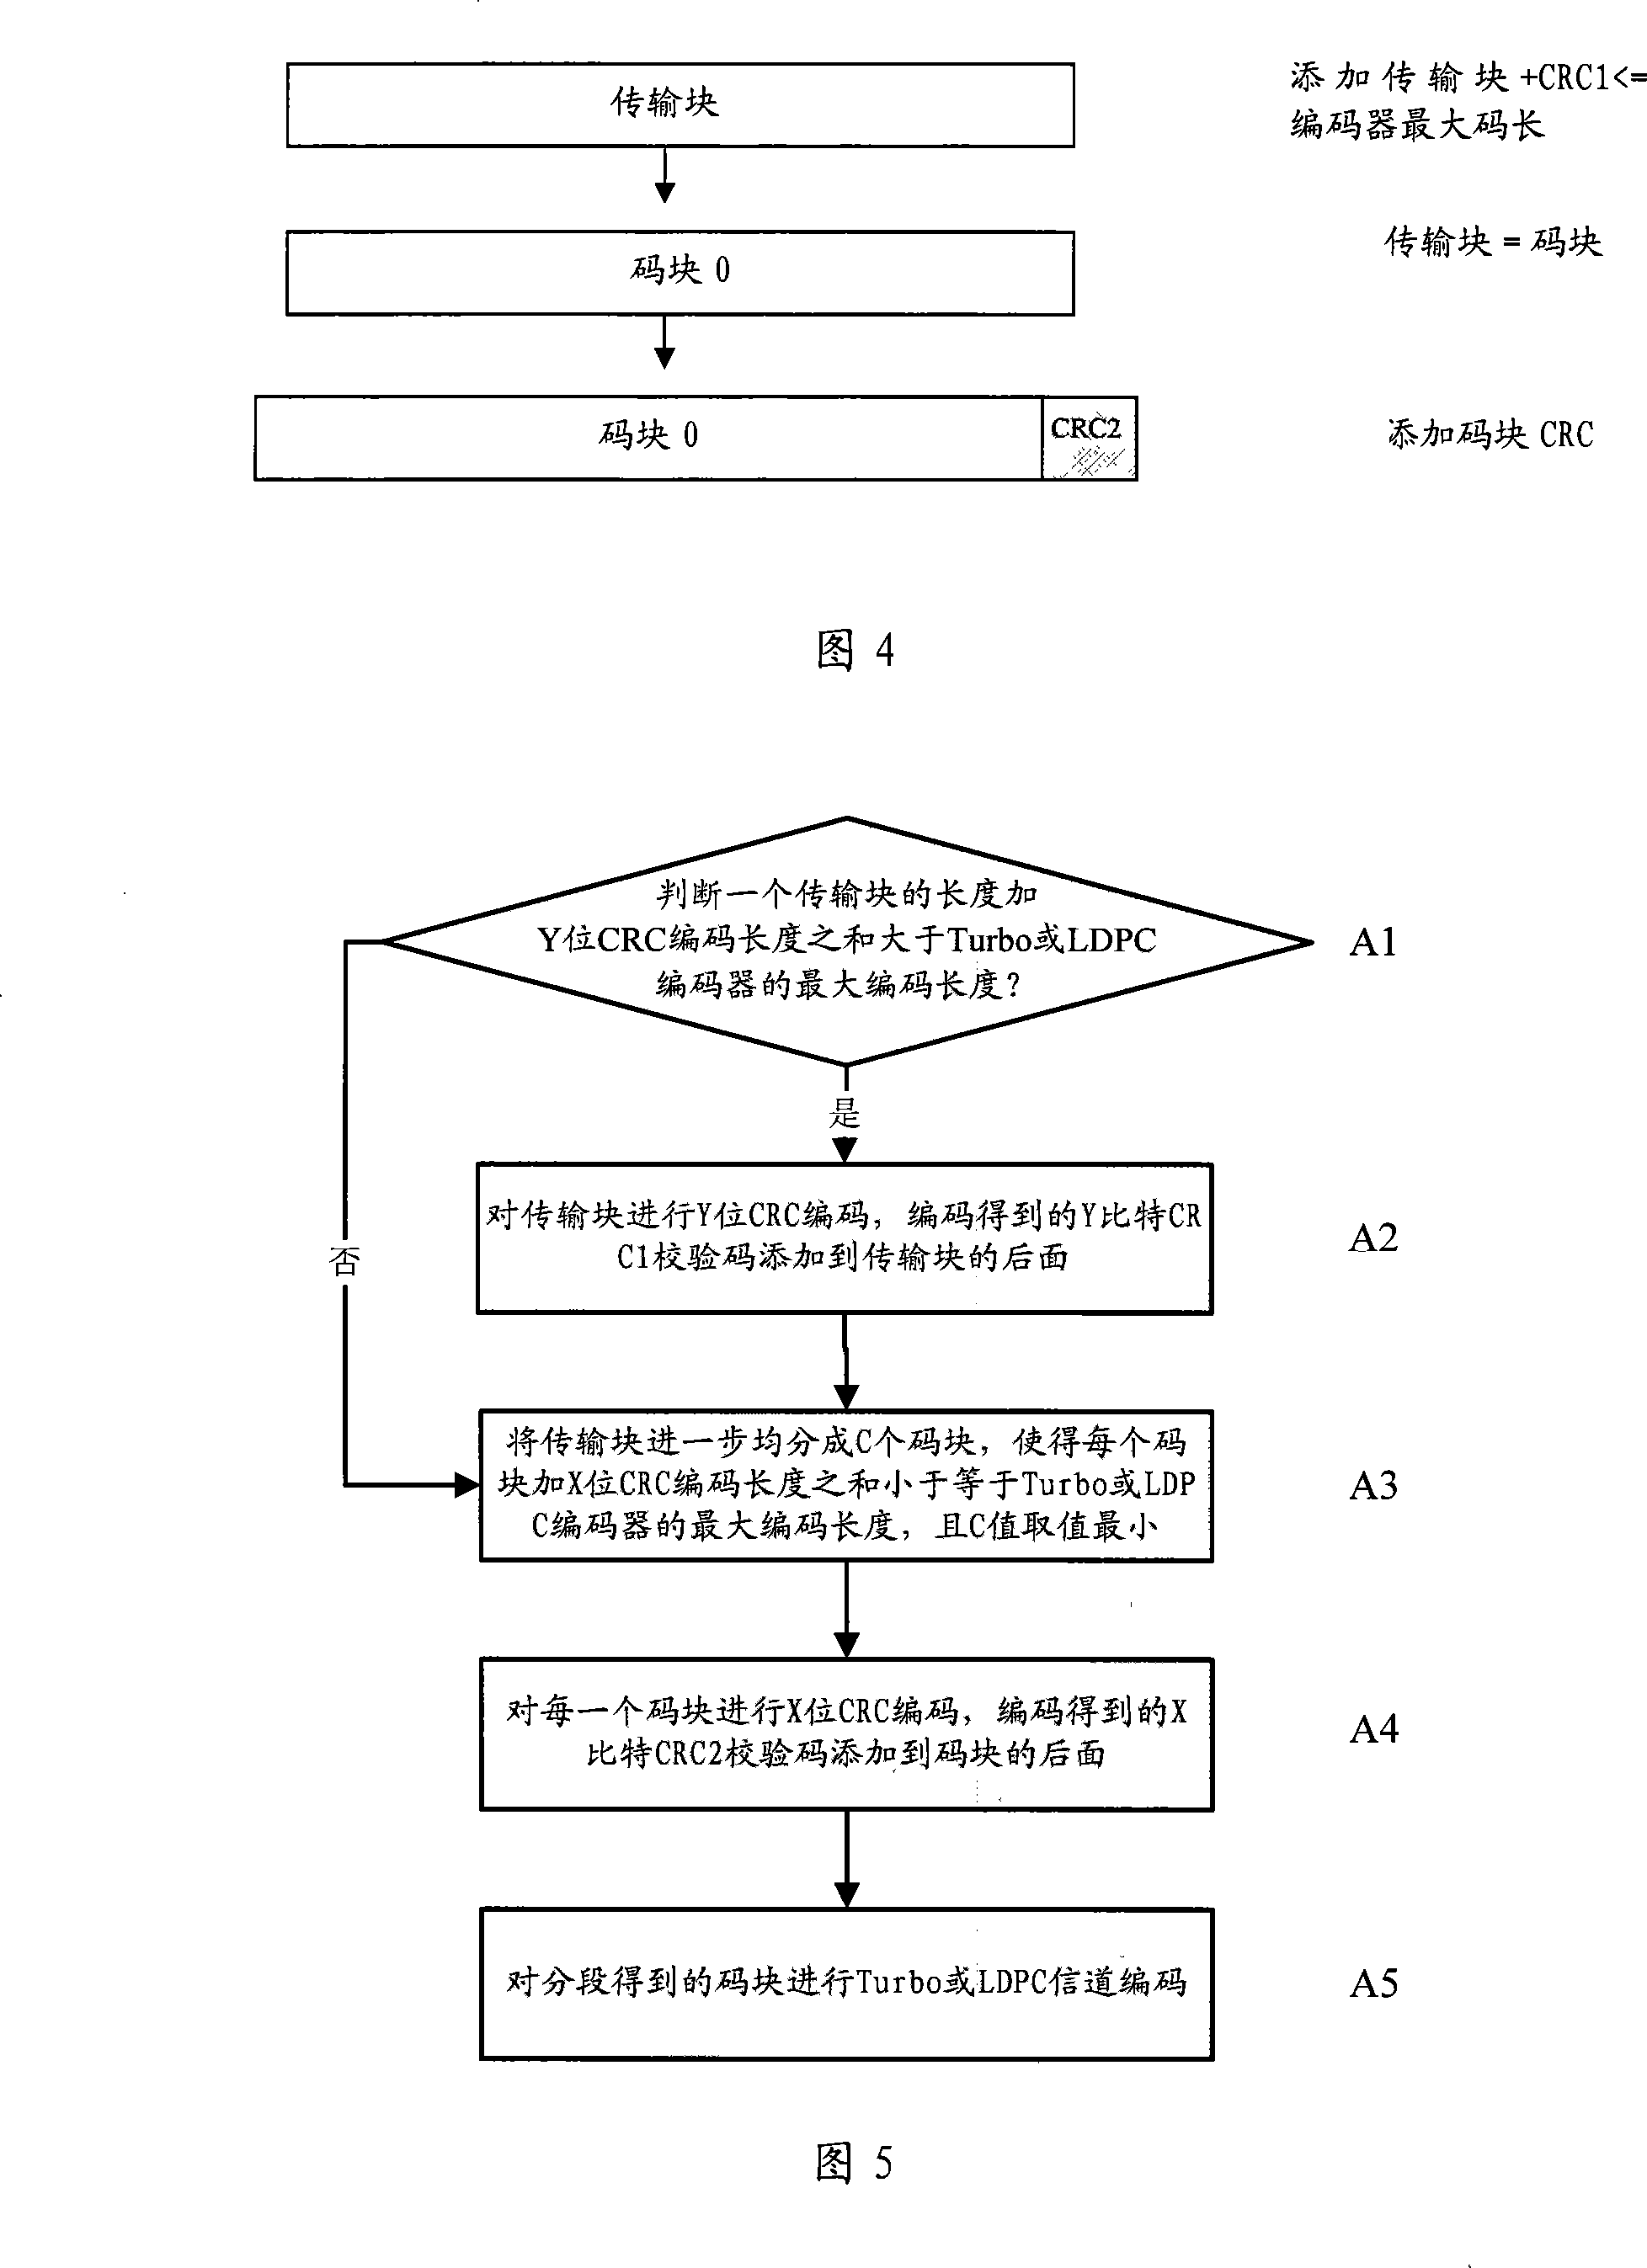 Method of adding cyclic redundancy code of transmission block